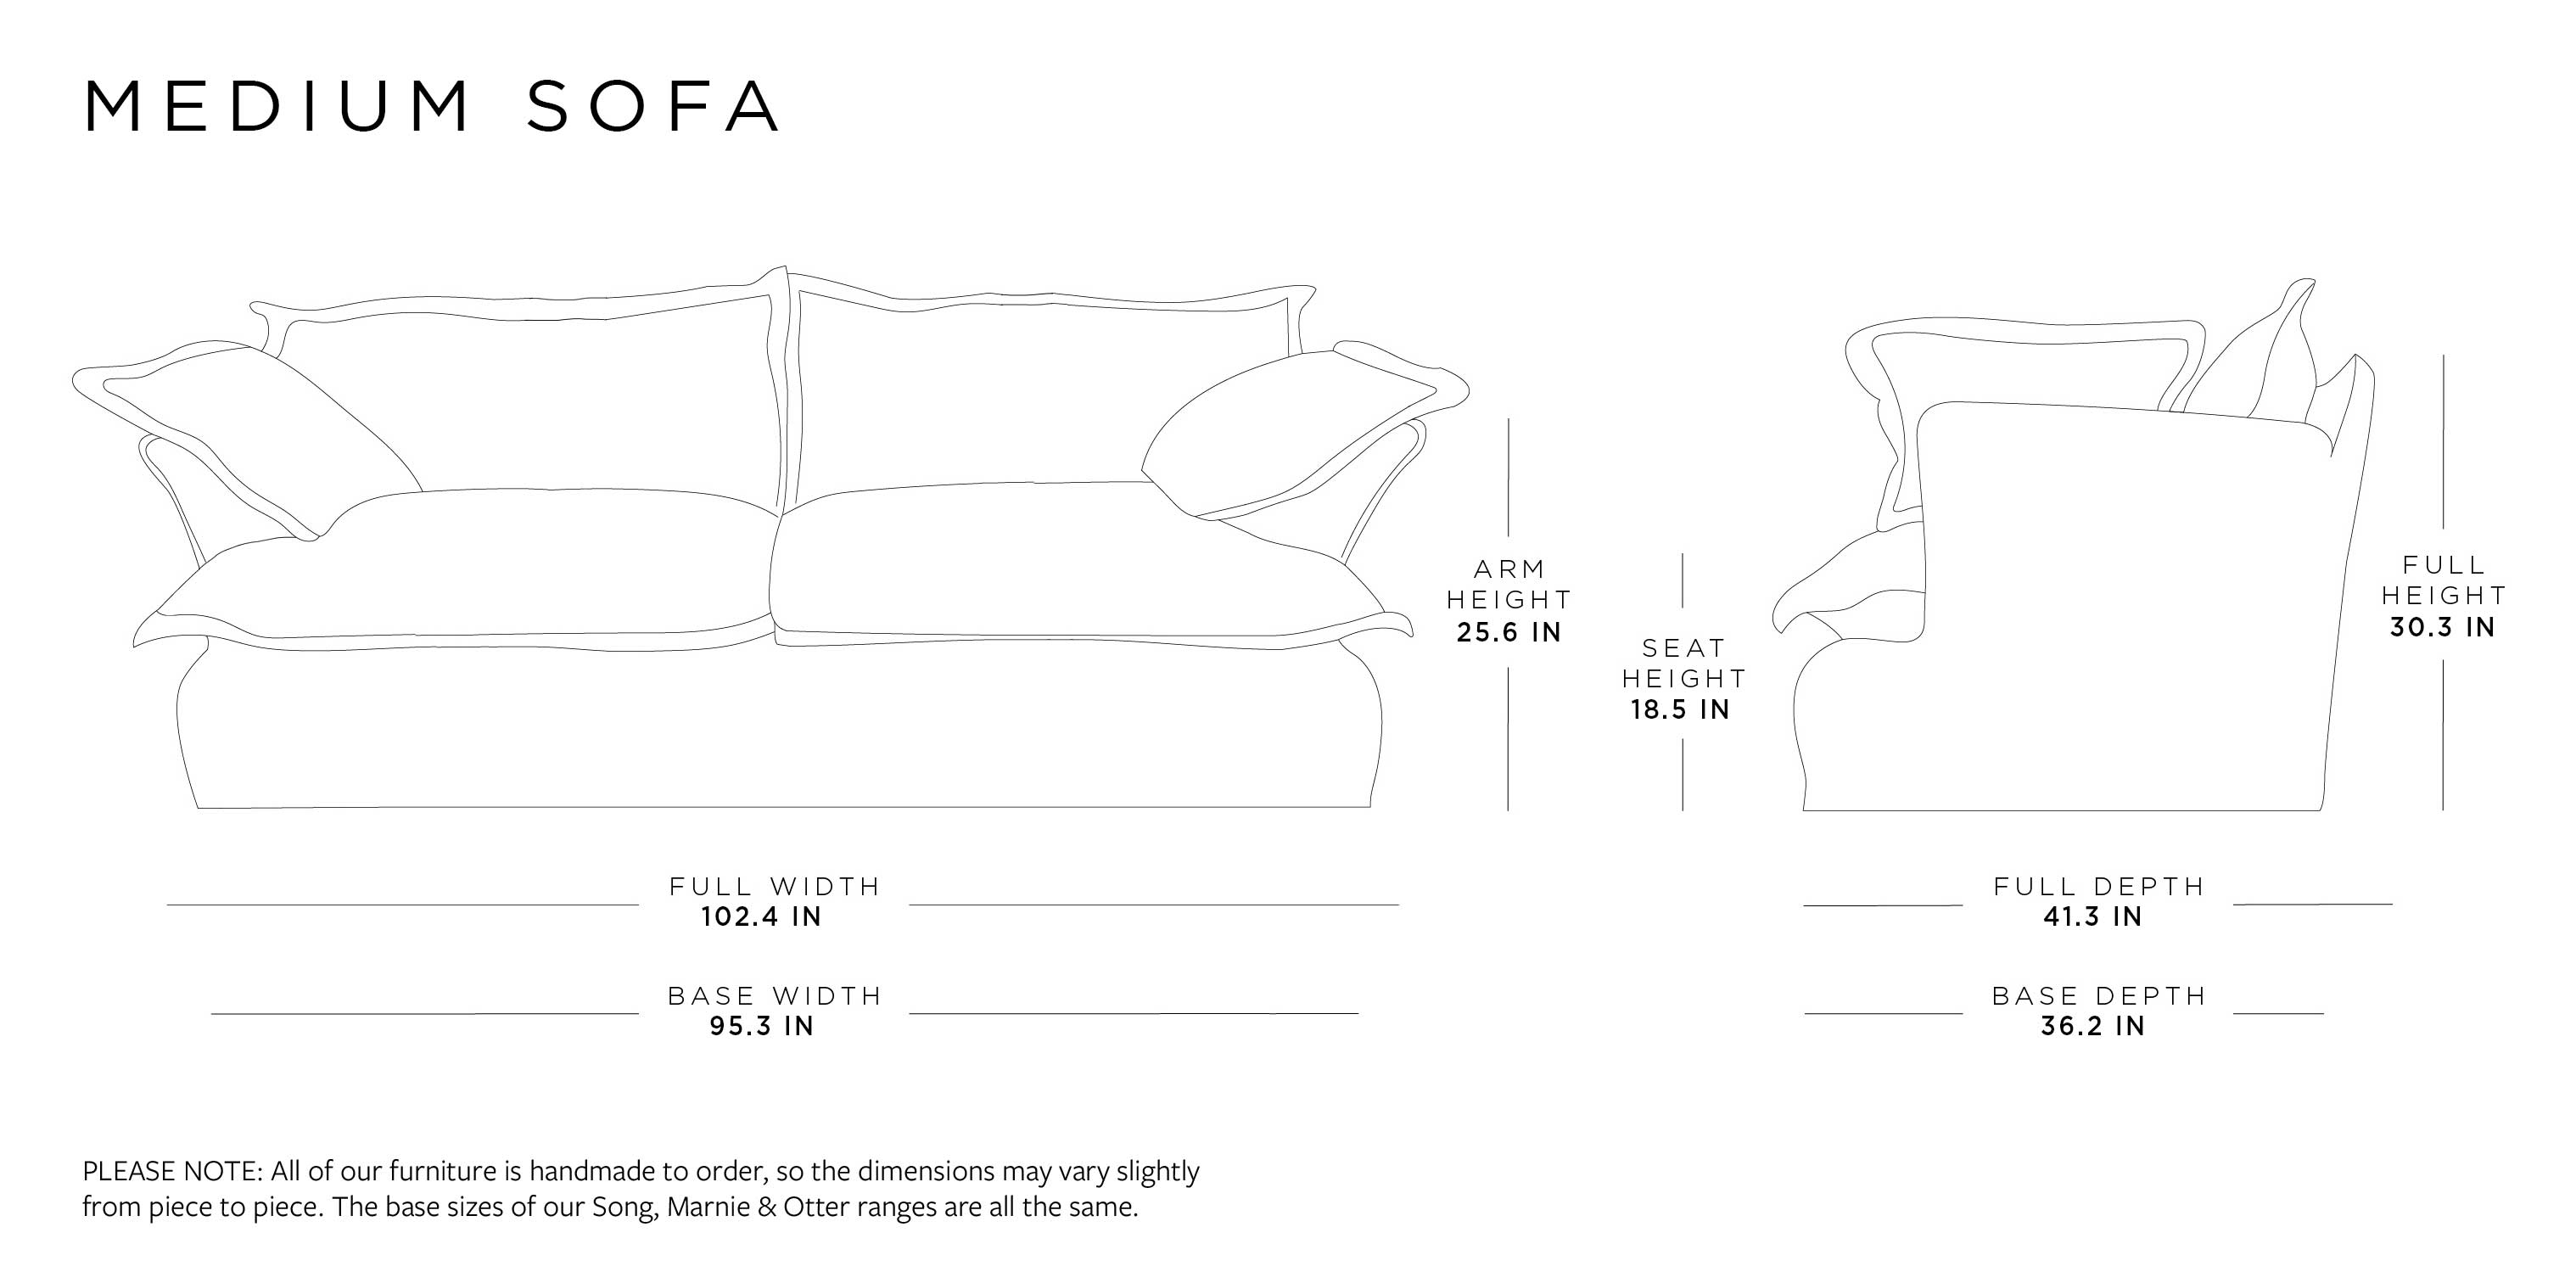 Medium Sofa | Song Range Size Guide